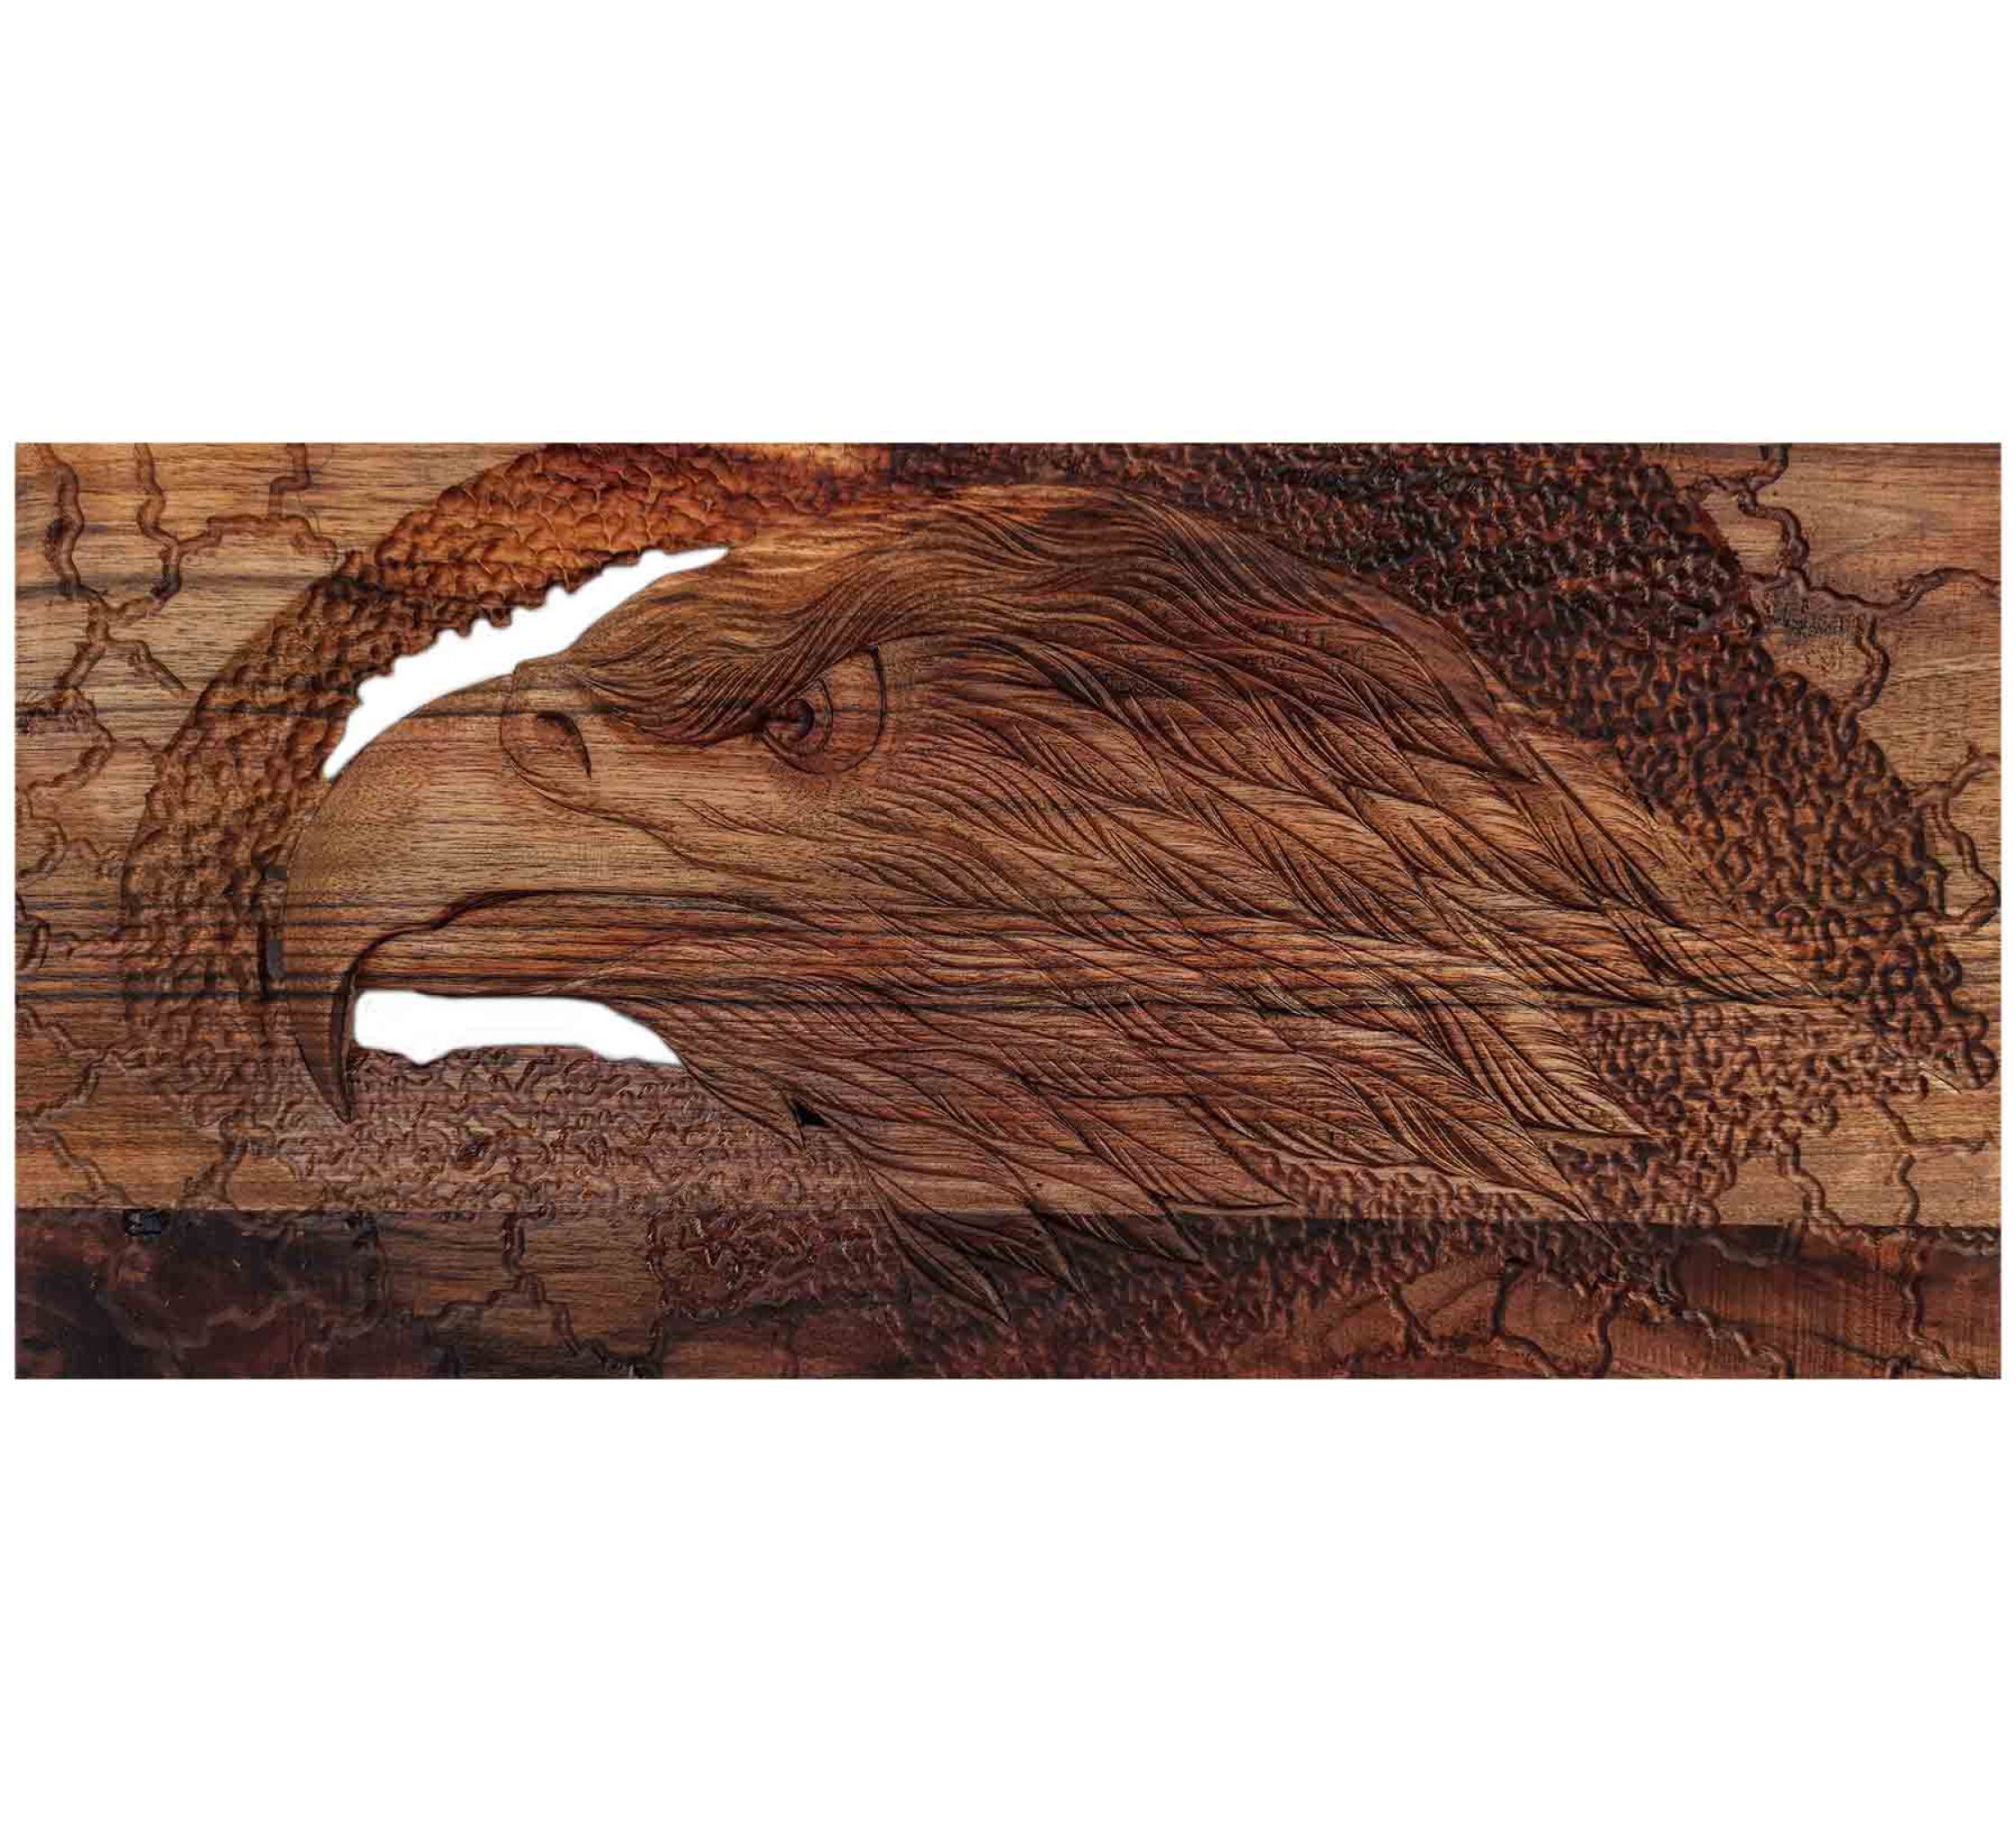  تابلو منبت طرح عقاب روی چوب گردو، تابلو دکوری 